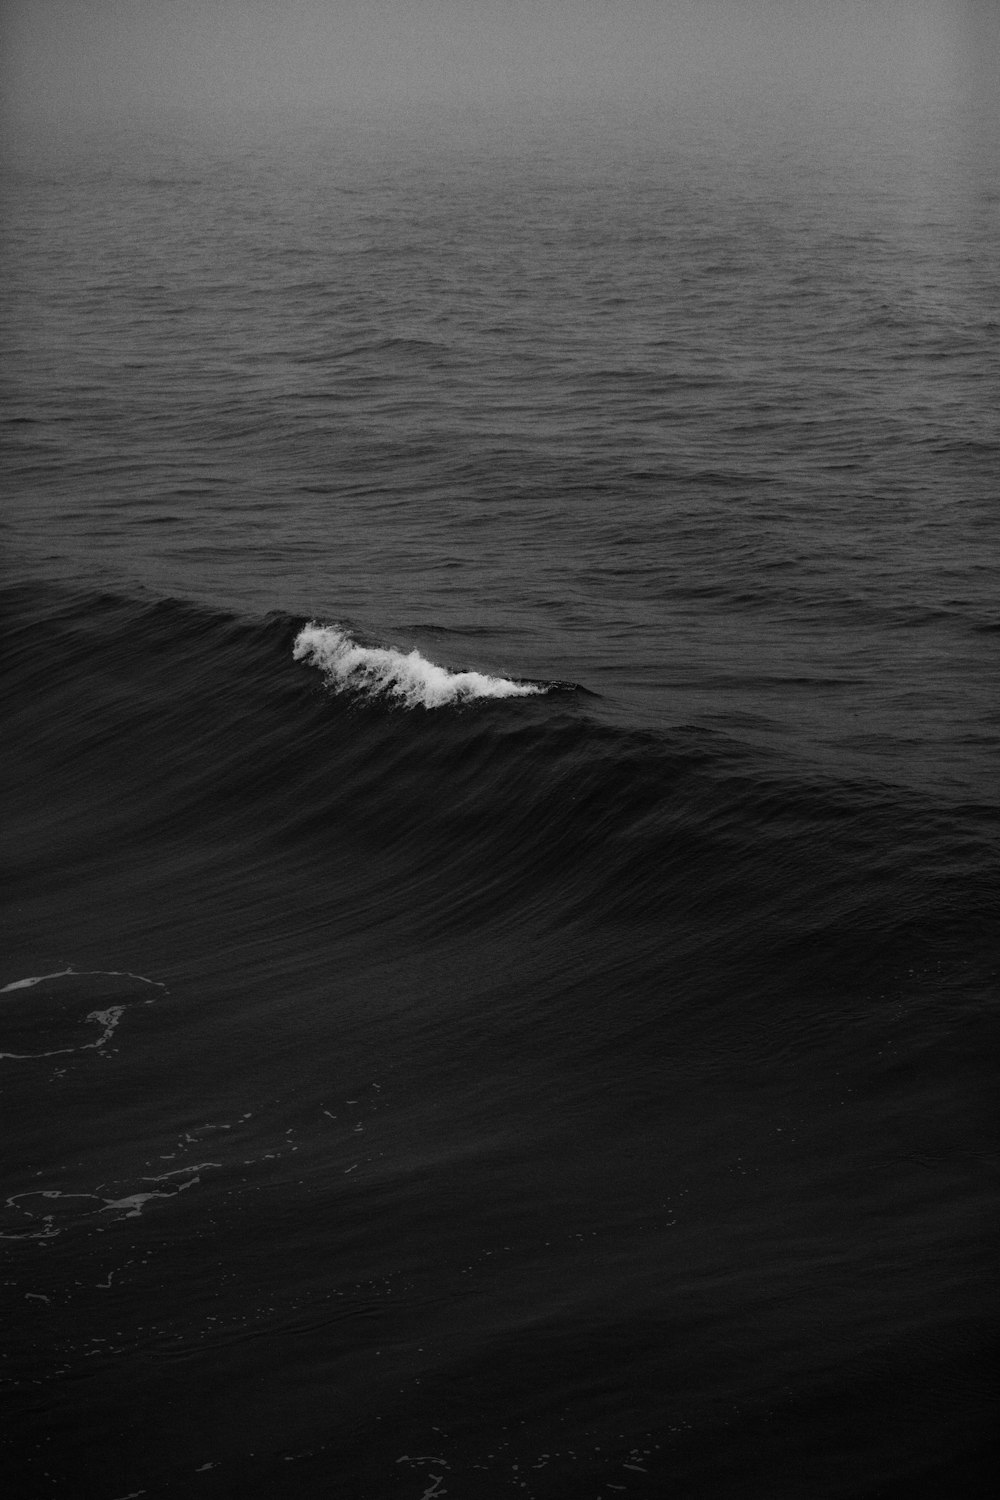 ocean wave in shallow focus lens